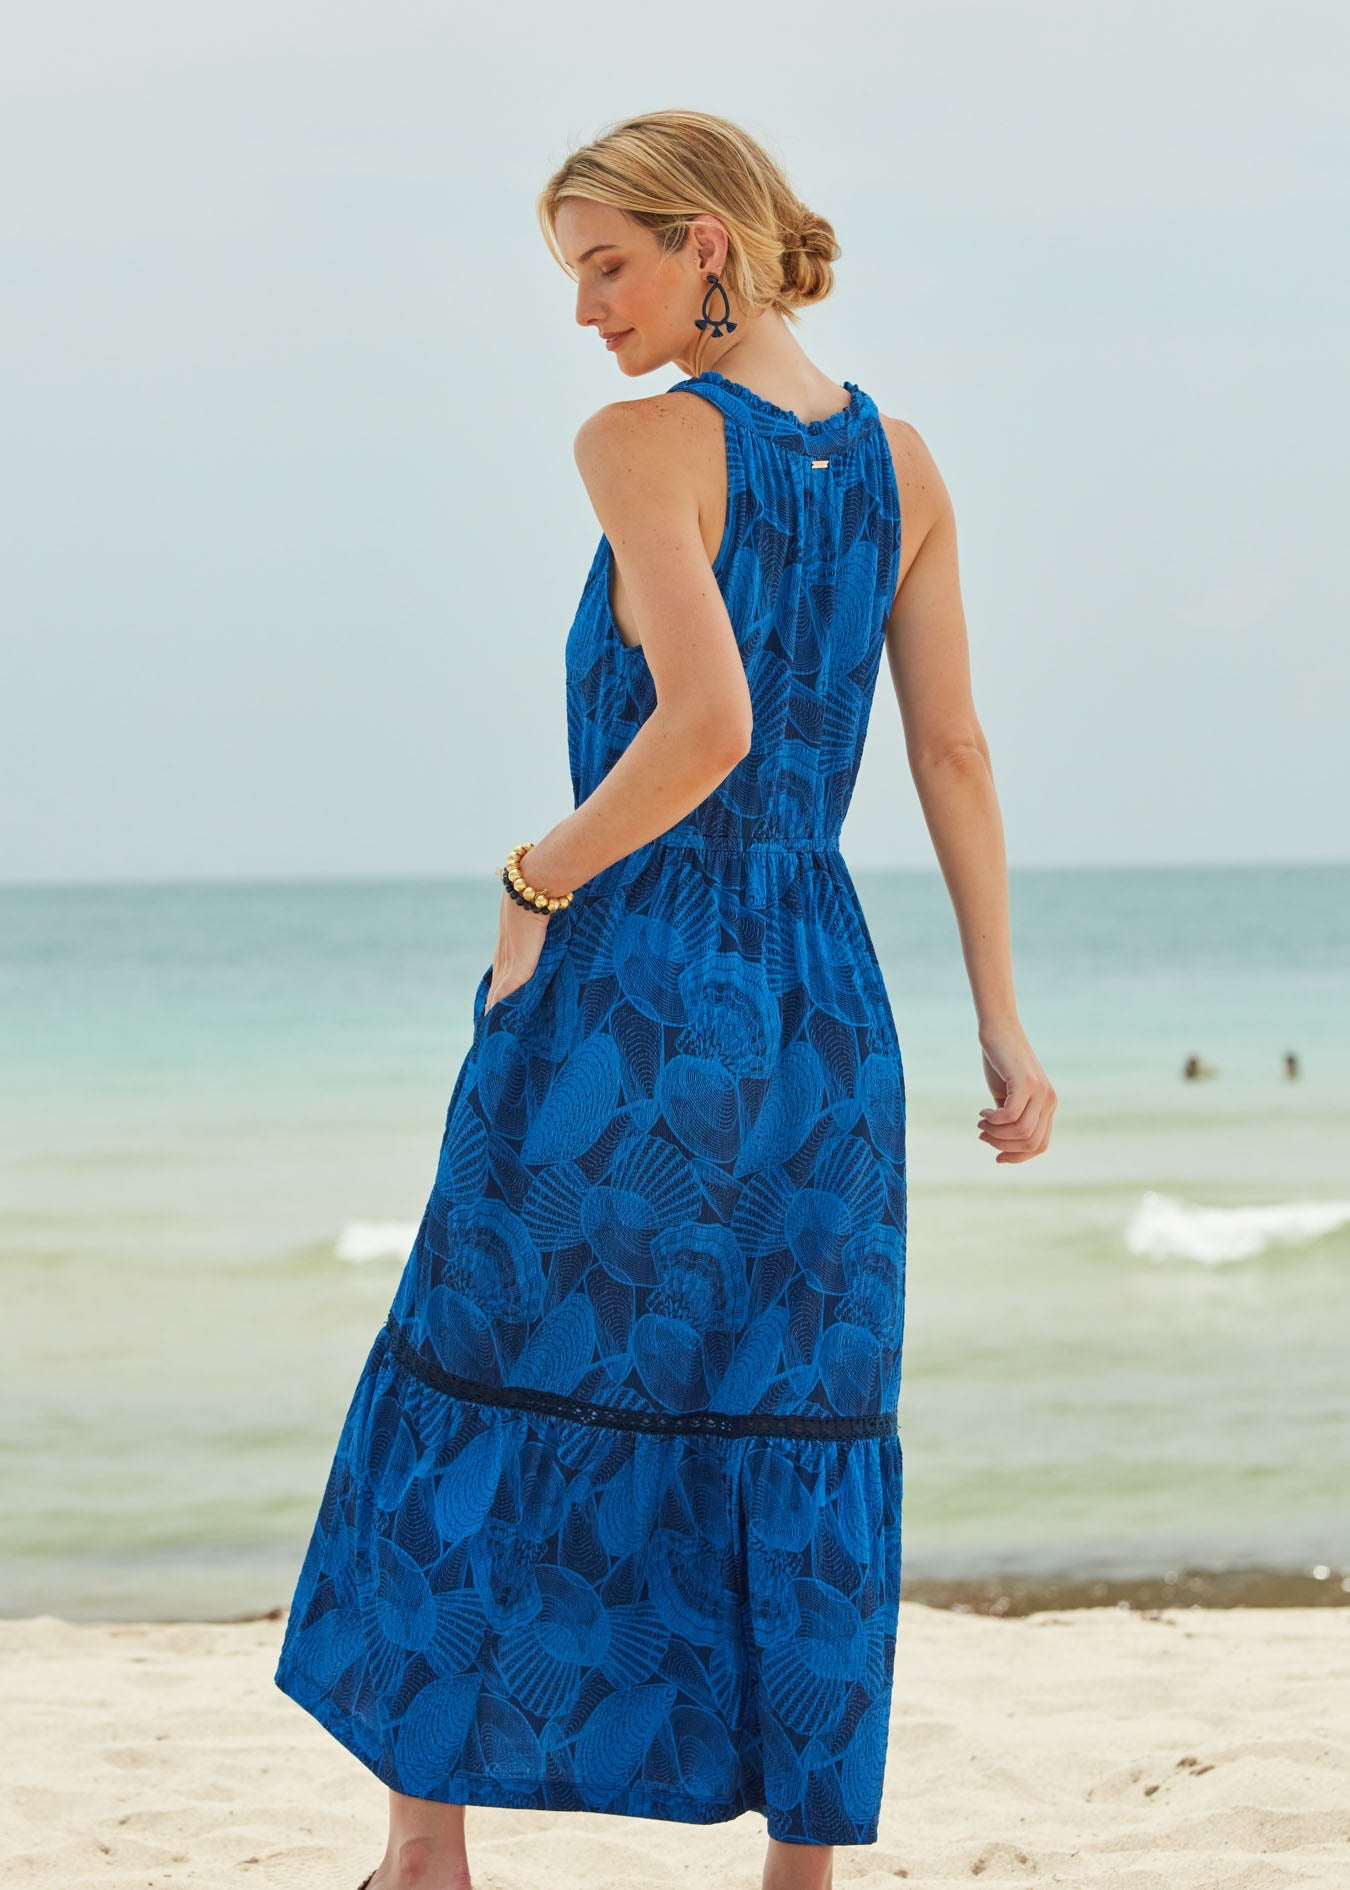 A blonde woman facing behind wearing the San Sebastian Tie Neck Maxi Dress on a beach.